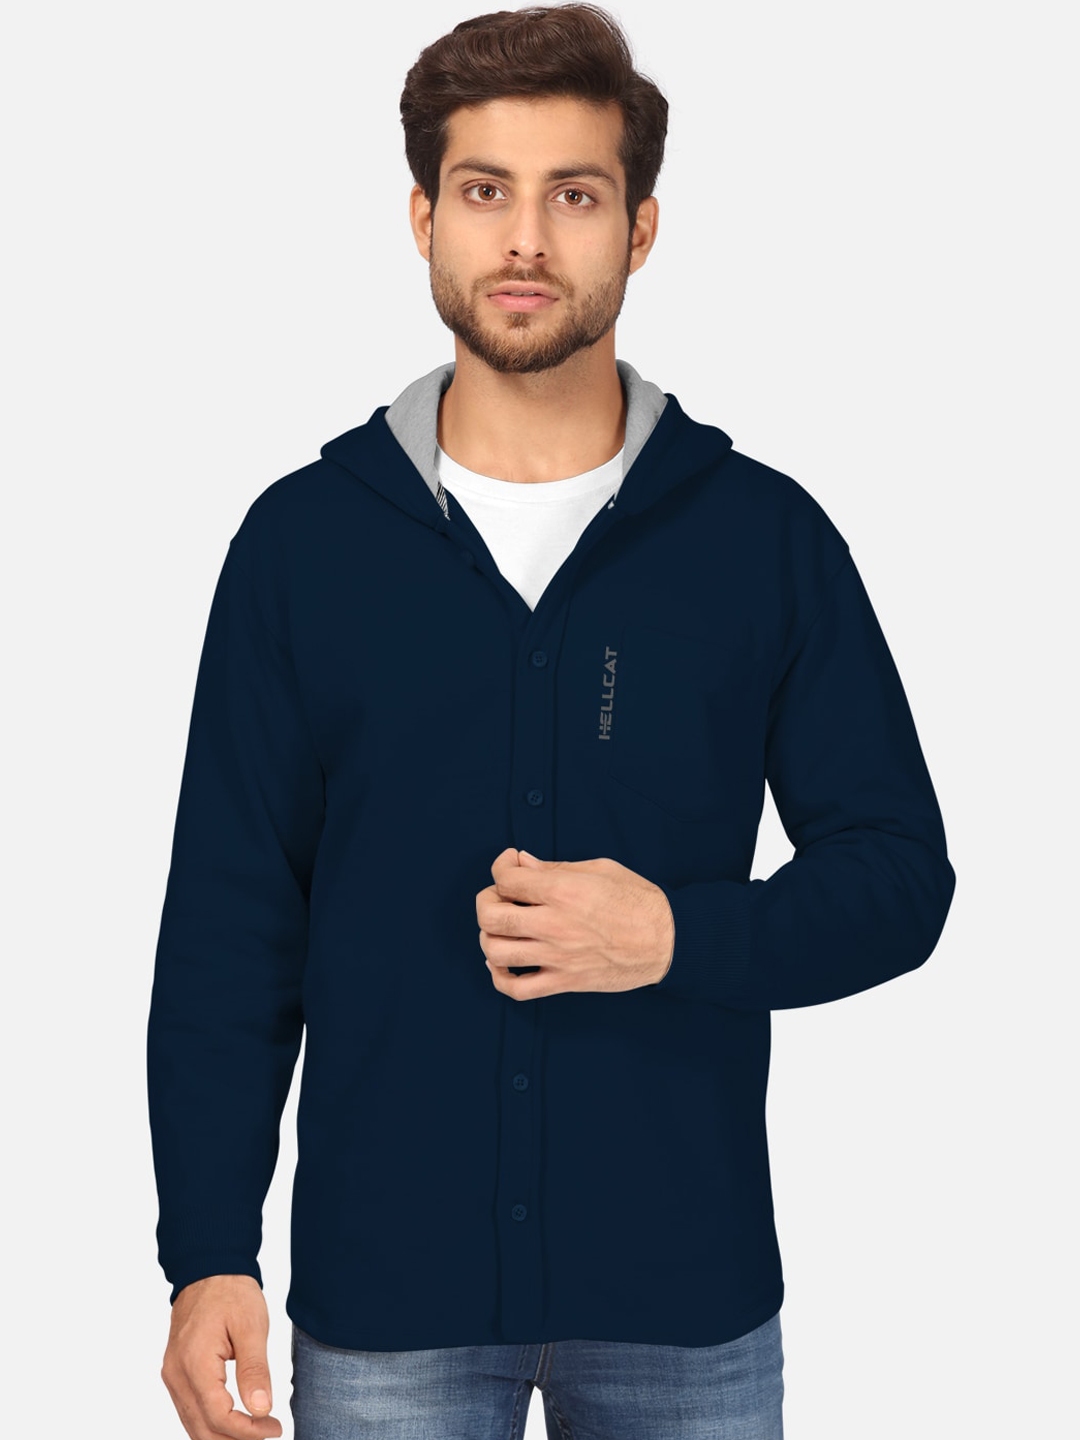 Buy BULLMER Men Navy Blue Hooded Sweatshirt - Sweatshirts for Men ...